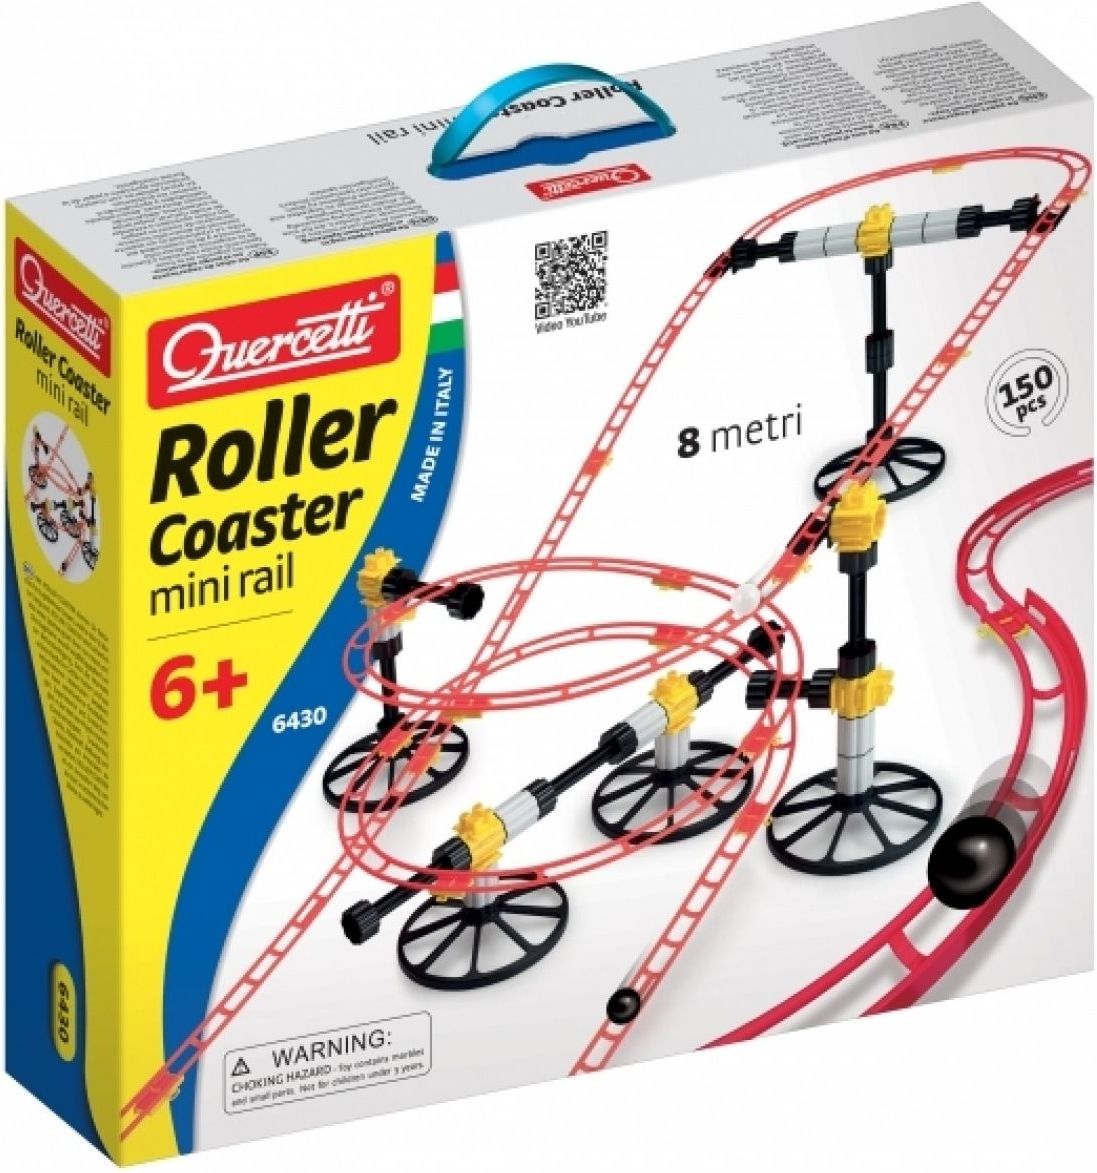 Skyrail Roller Coaster mini rail 150 części - obrázek 1